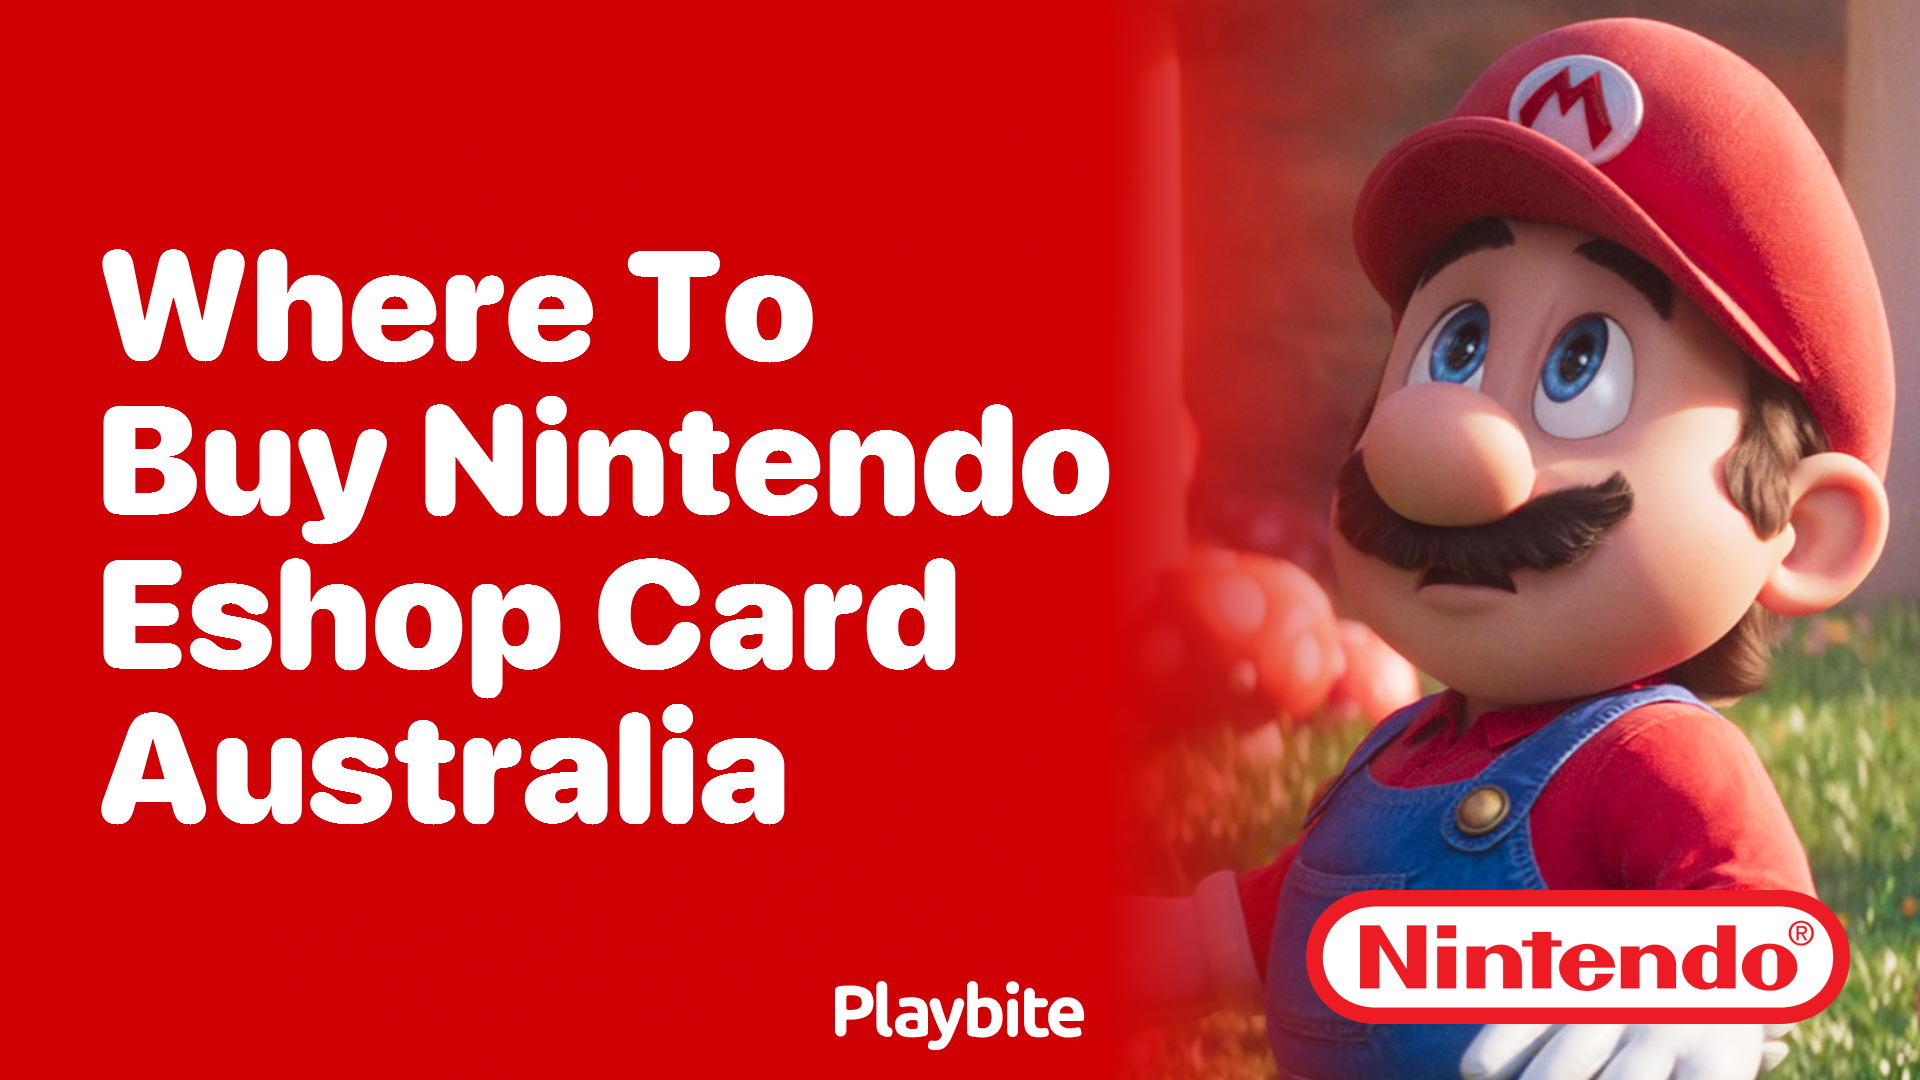 Where to Buy Nintendo eShop Cards in Australia